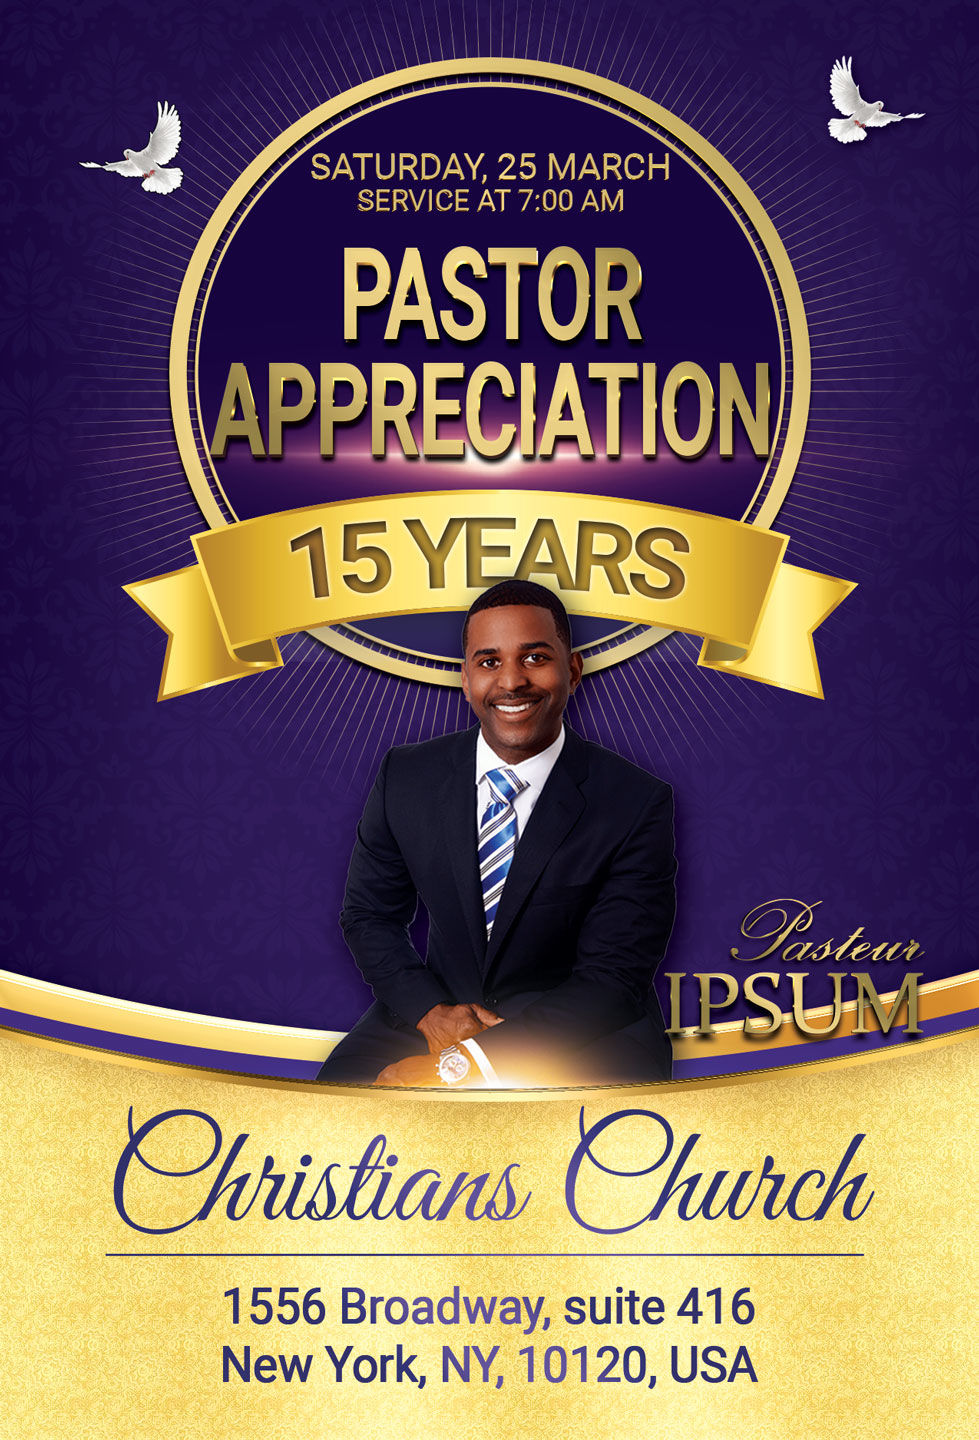 Church Flyer Anniversary Pastor Appreciation Flyer By artolus ...